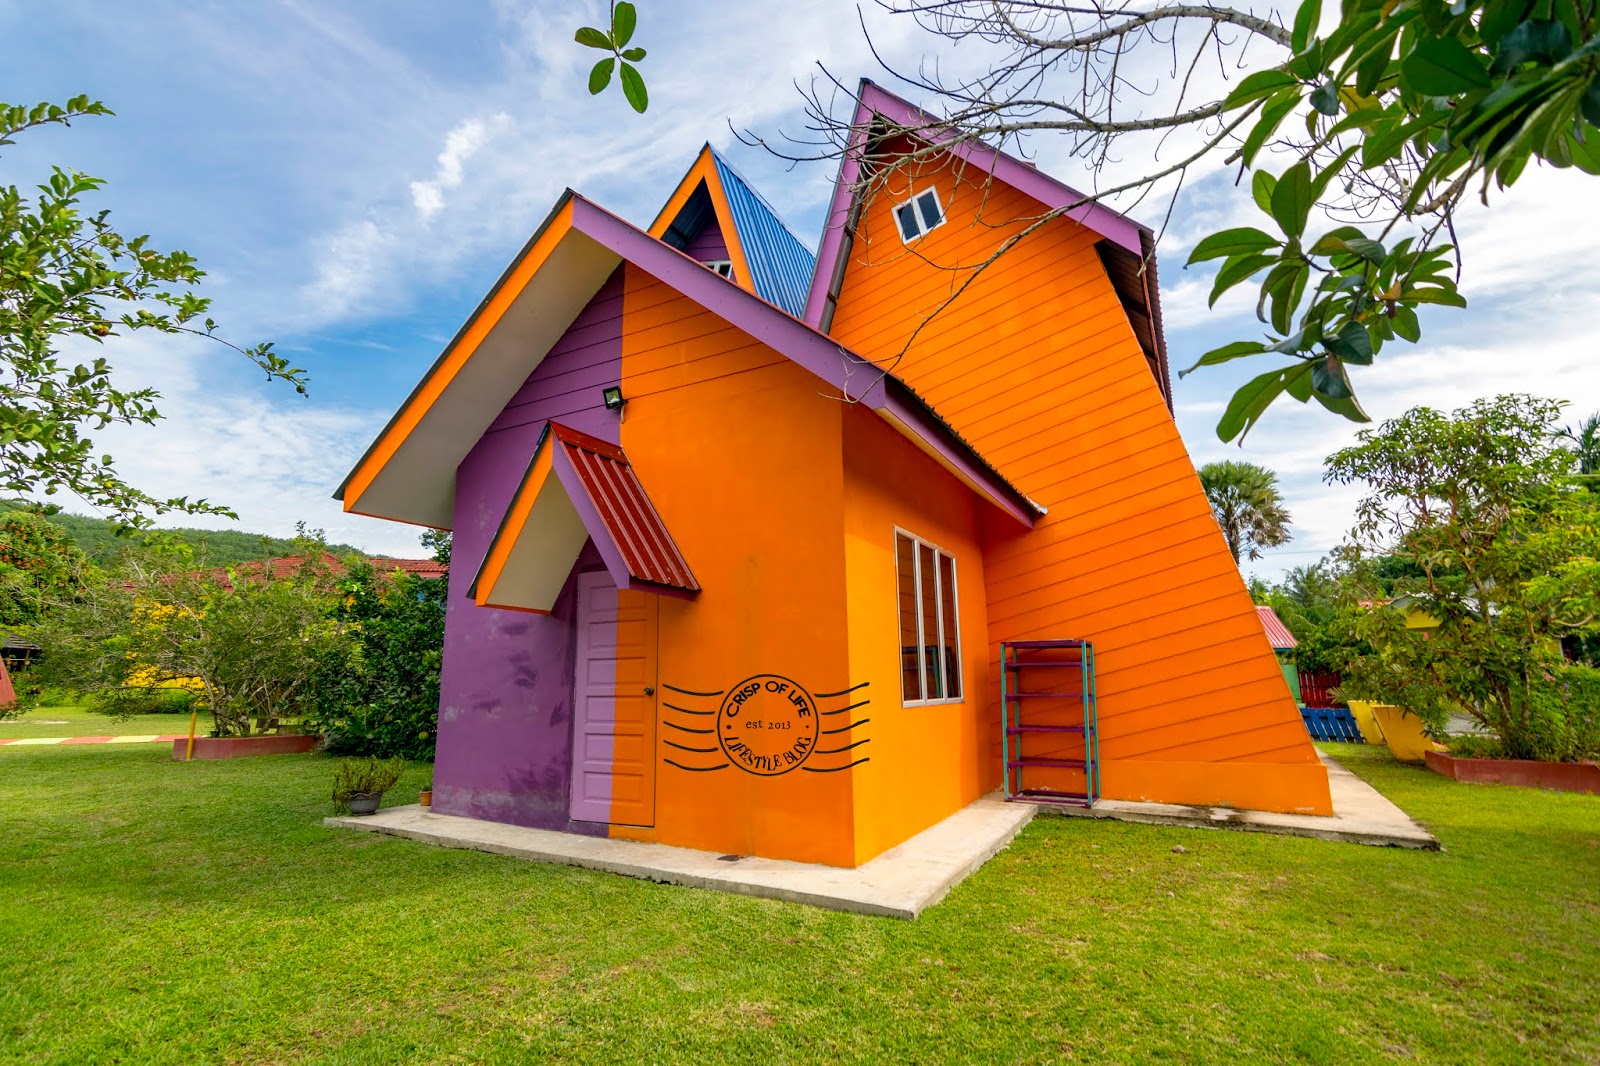 MnM Home Whimsical Houses, Rumah Senget @ Changlun, Kedah